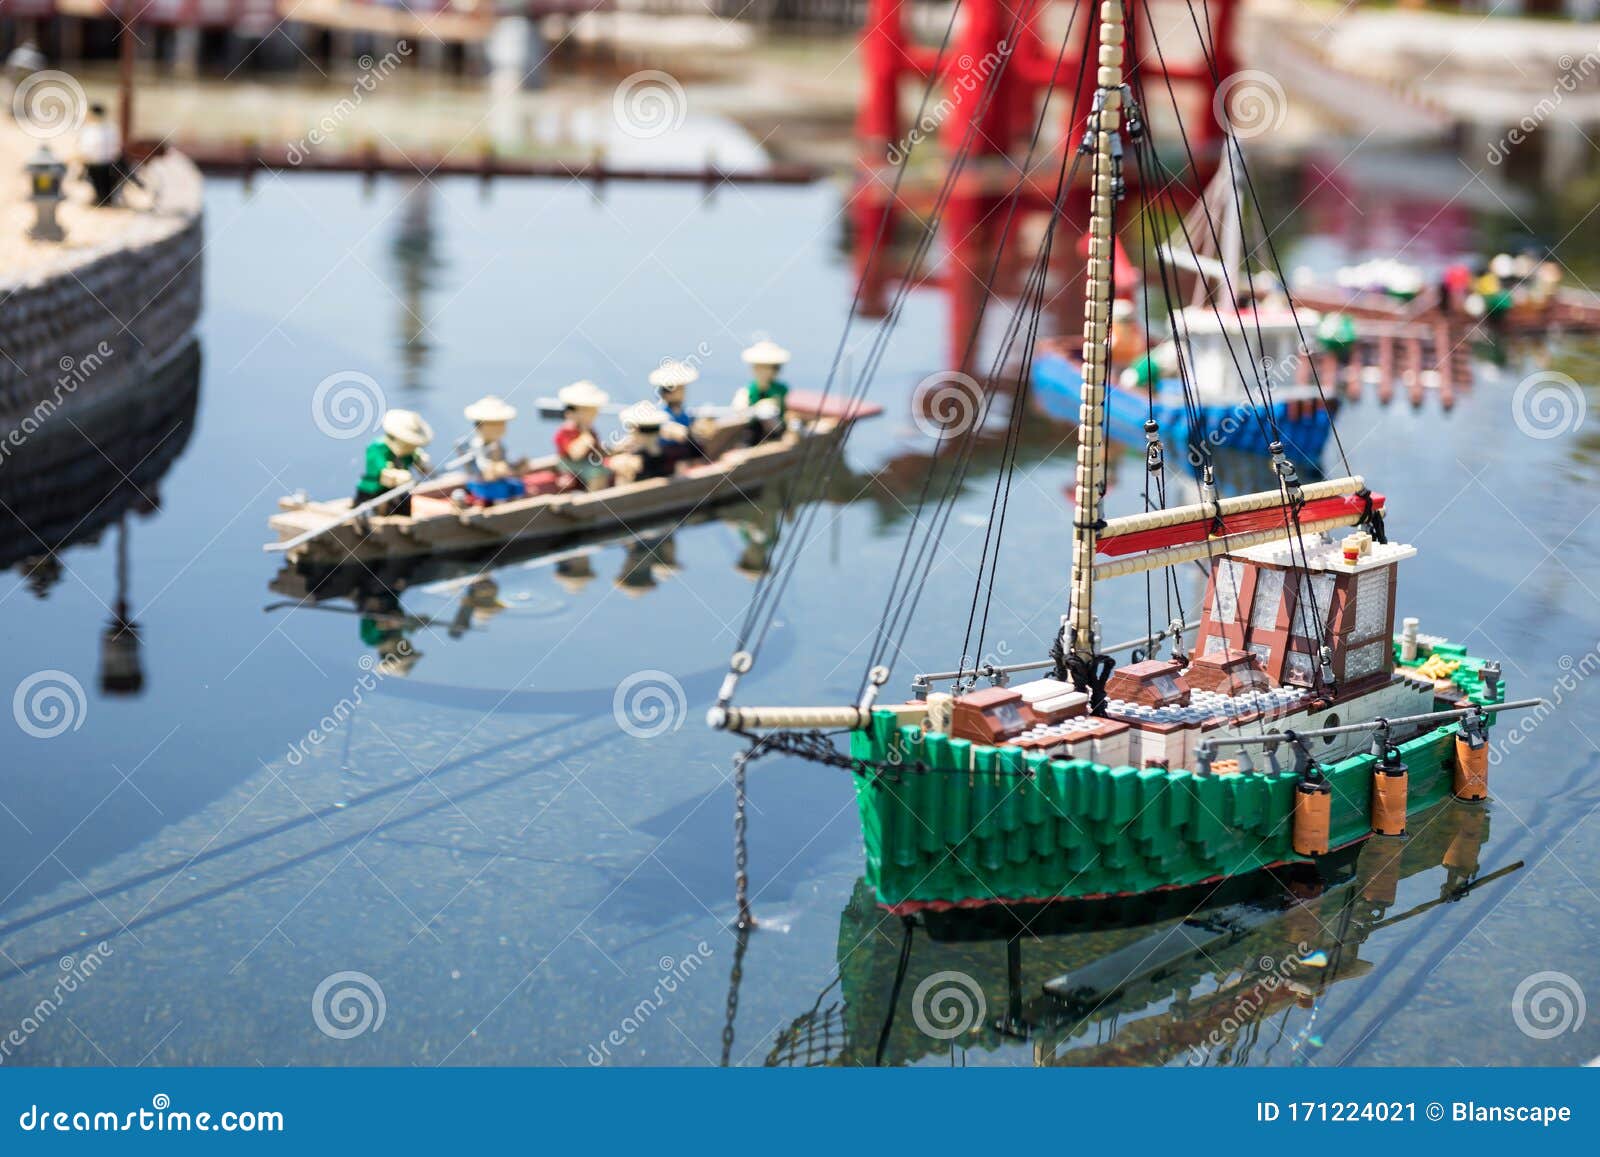 Lego Fishing and Transportation Boat, Nagoya Editorial Photo - Image of  colors, model: 171224021